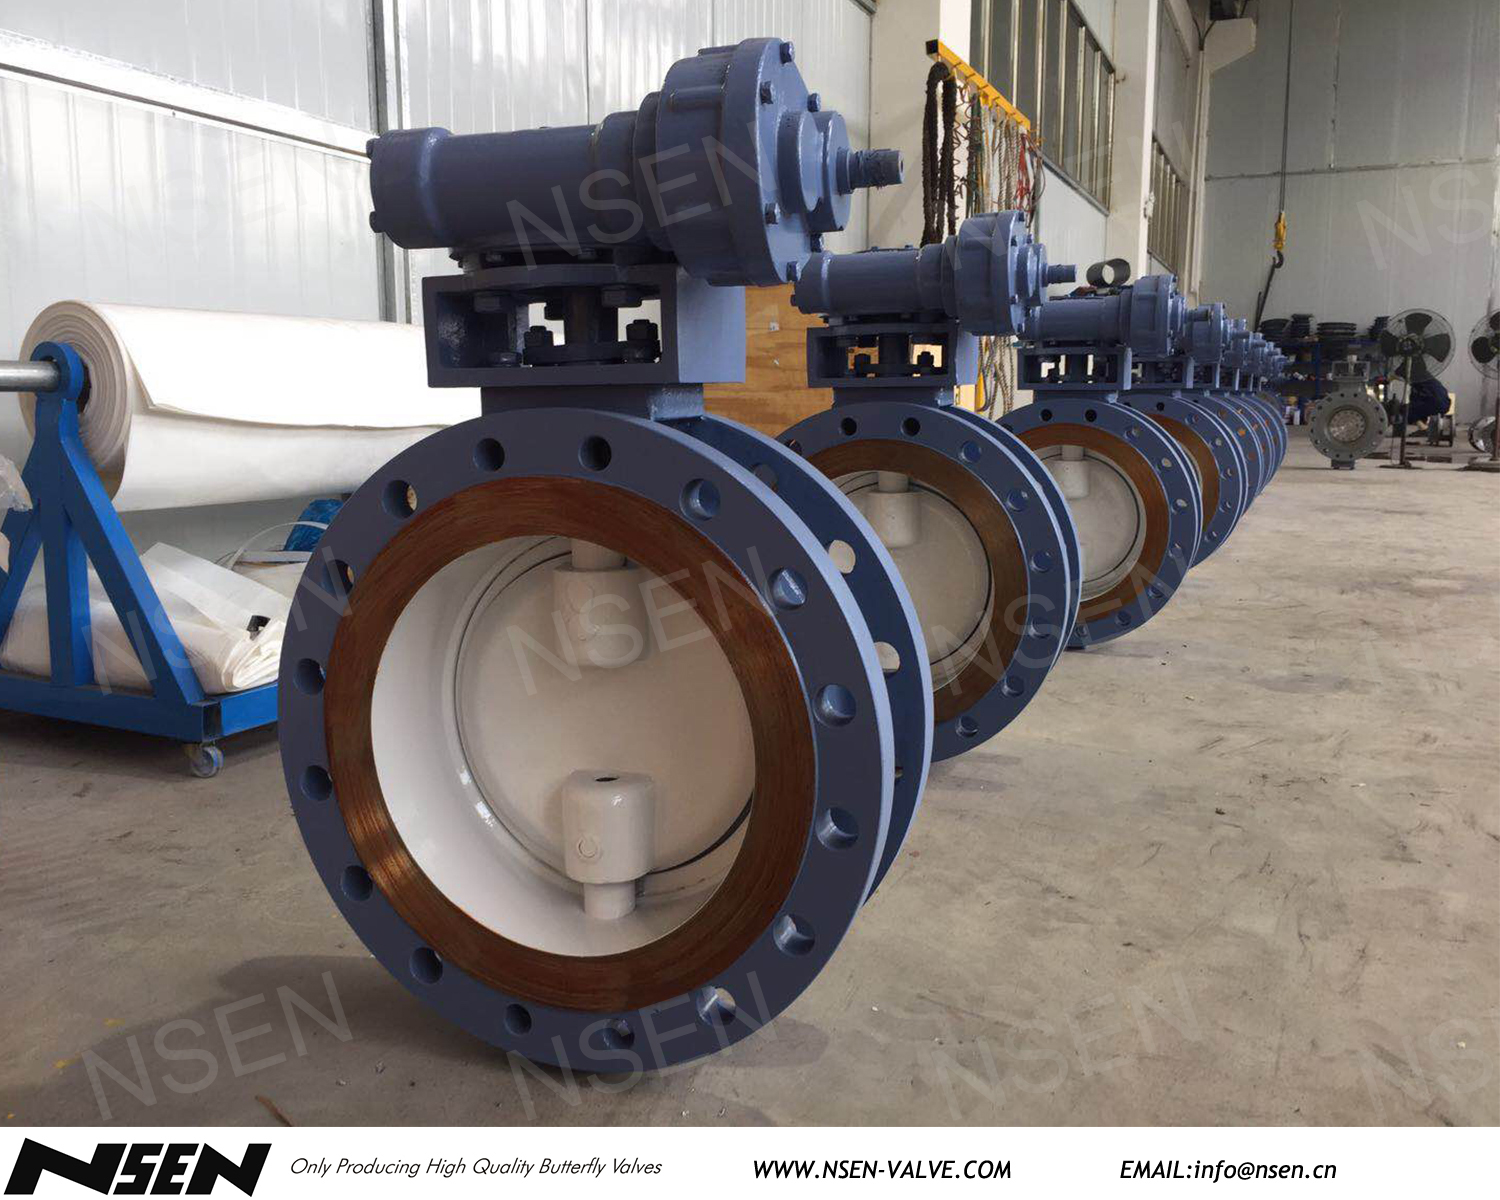 NSEN valve obtain TUV API607 Certification